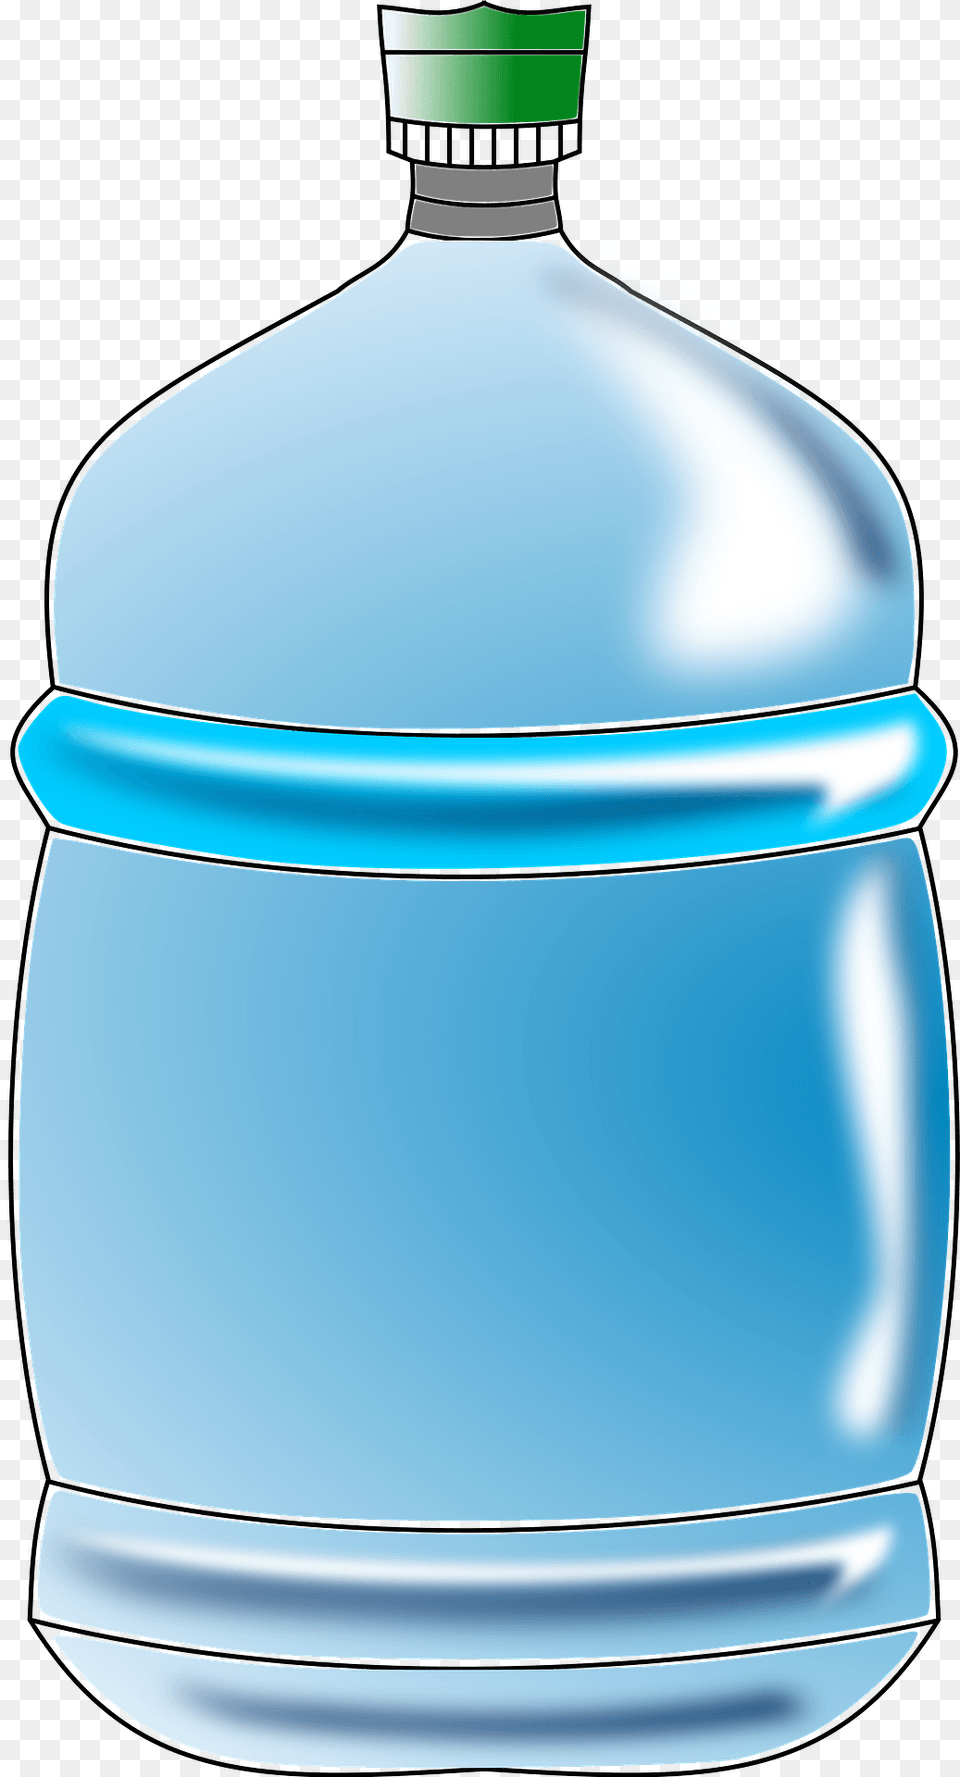 Big Water Cooler Bottle Clipart, Water Bottle, Beverage, Mineral Water Png